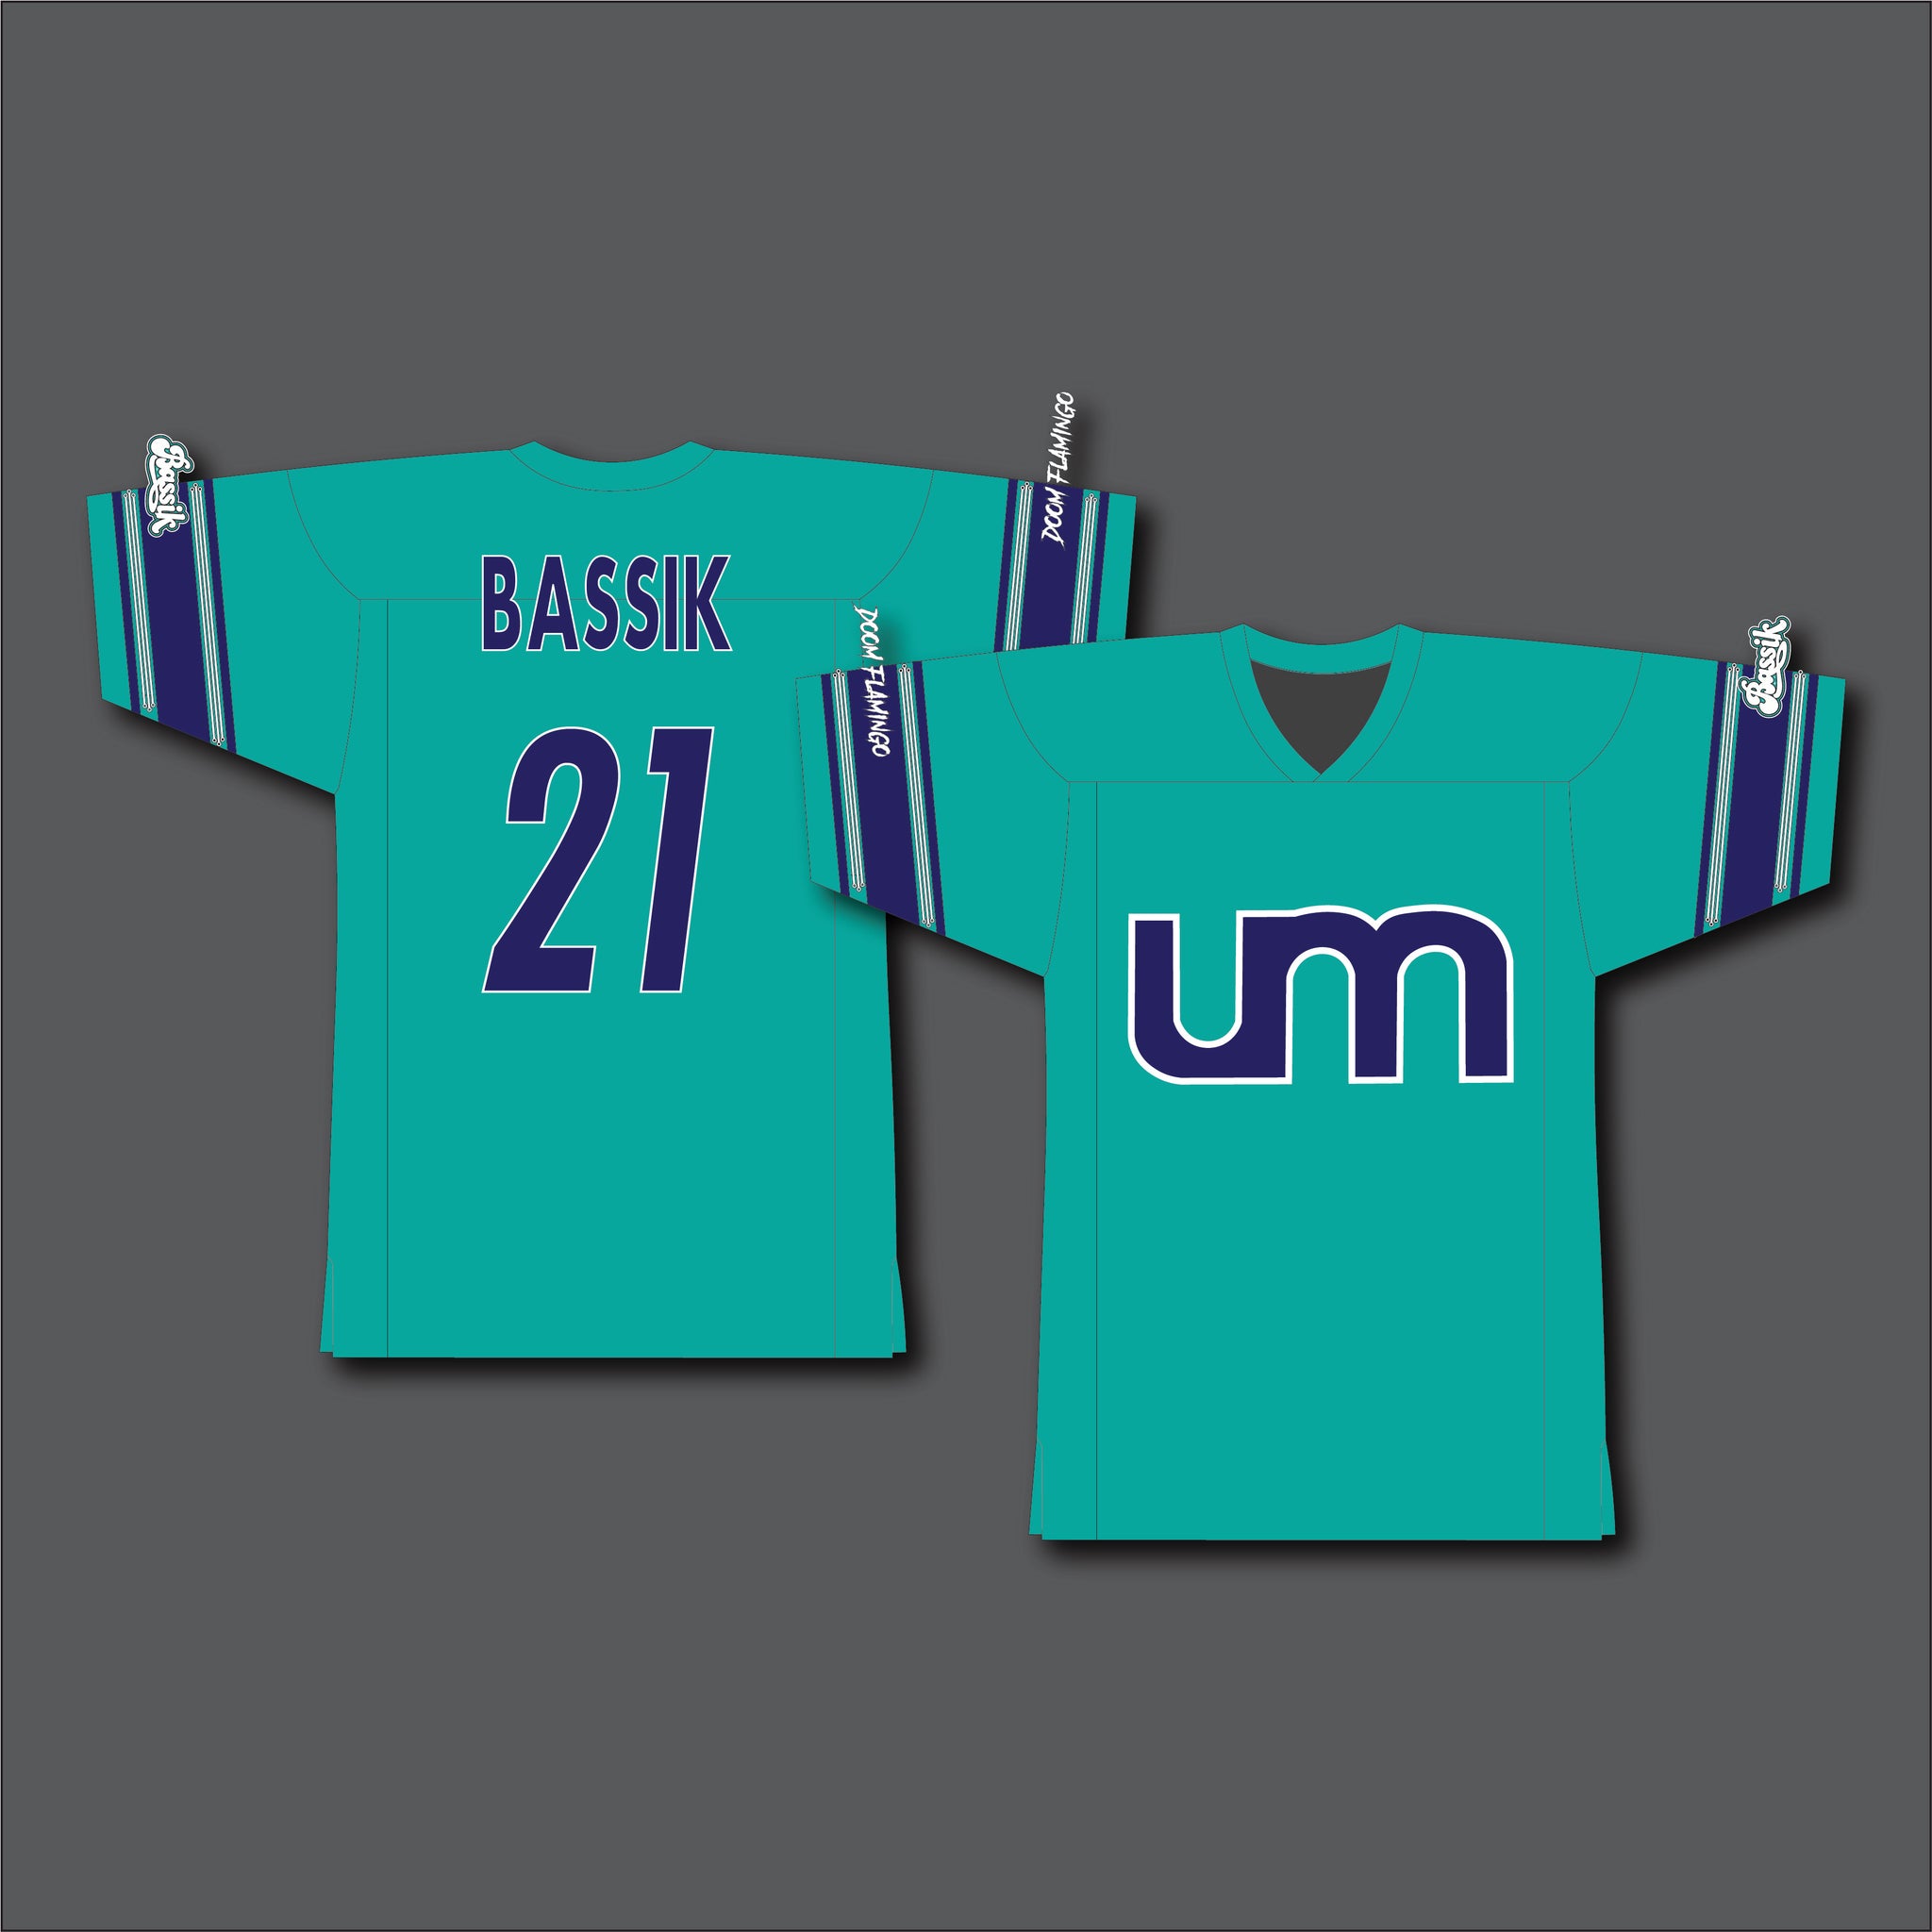 Teal/Purple Bassik Football Jersey